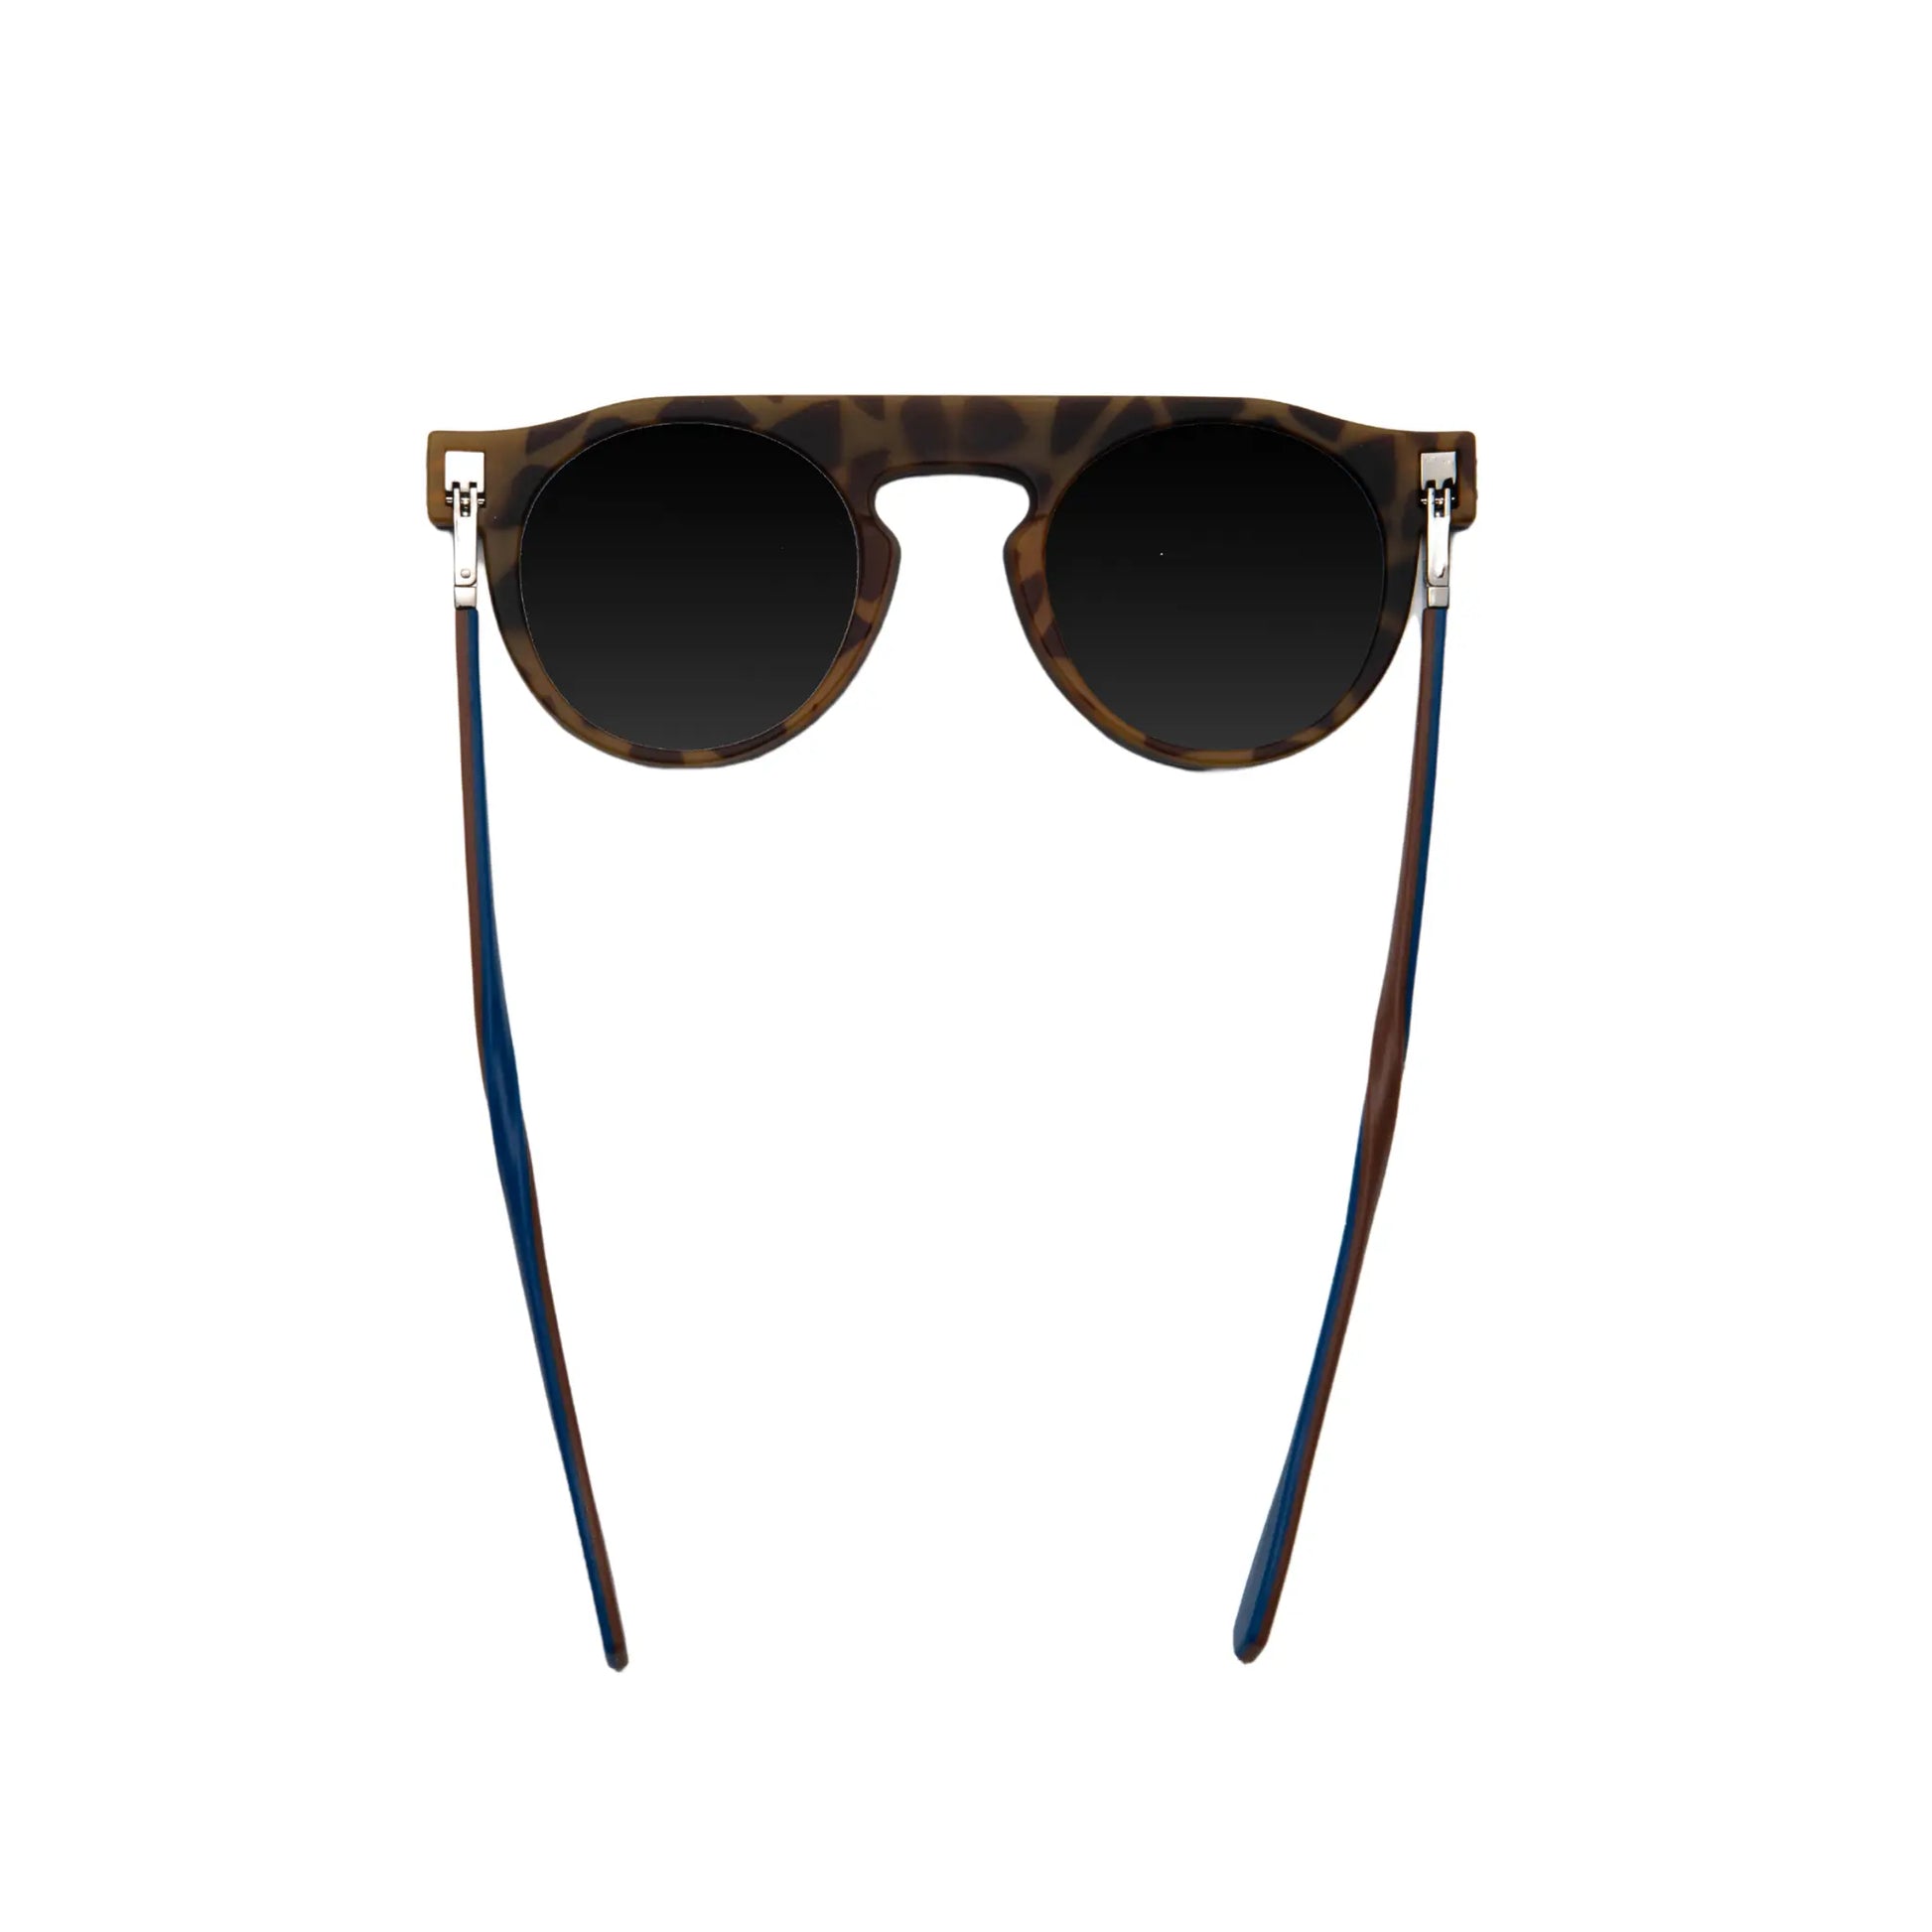 Reverso sunglasses Havana & dark blue reversible & ultra light top view